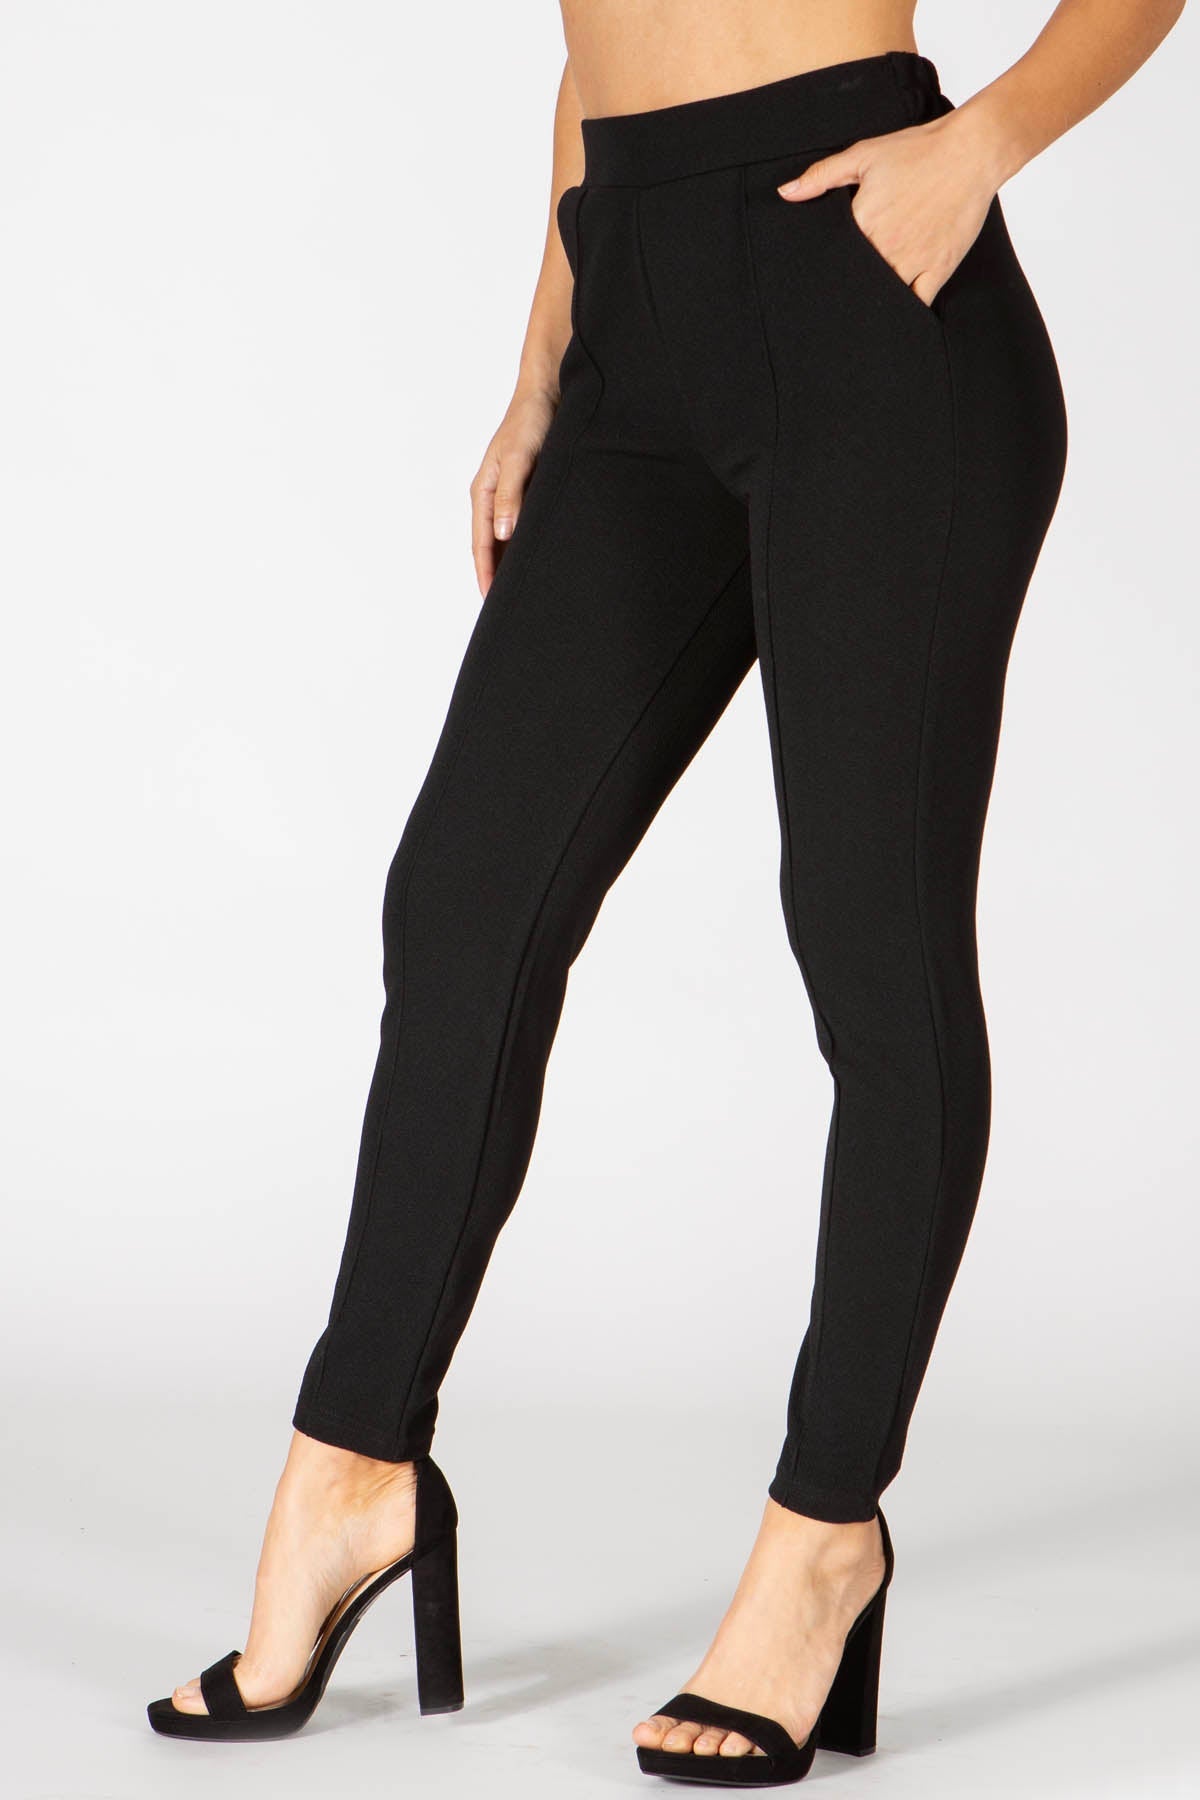 Wholesale Womens High Waist Textured Knit Slim Fit Pleat Pants - Black - S&G Apparel